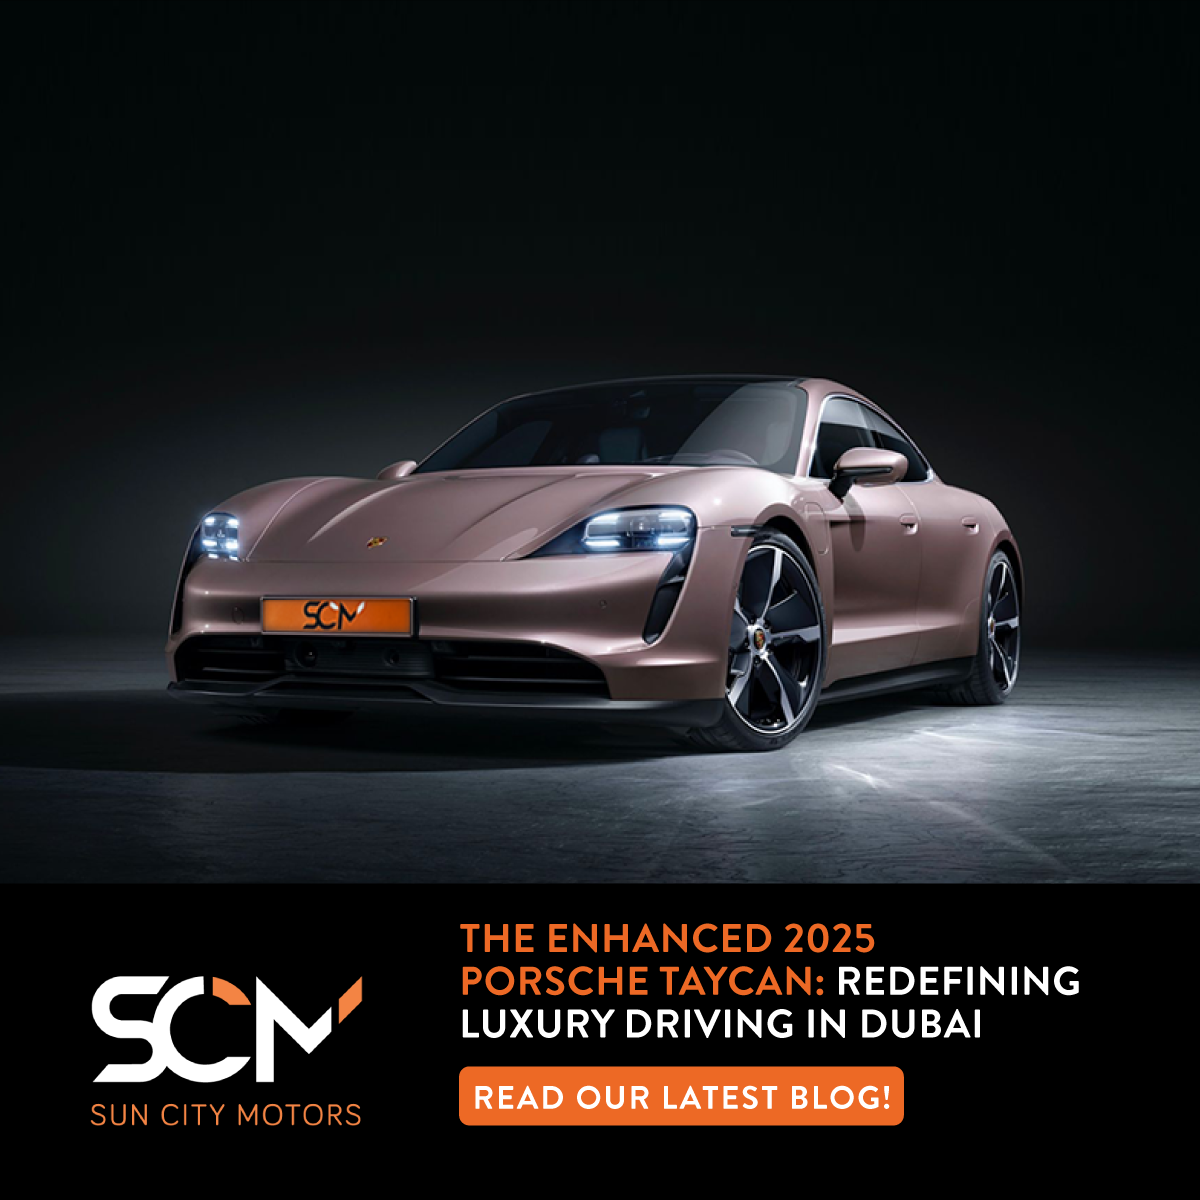 The Enhanced 2025 Porsche Taycan: Redefining Luxury Driving in Dubai